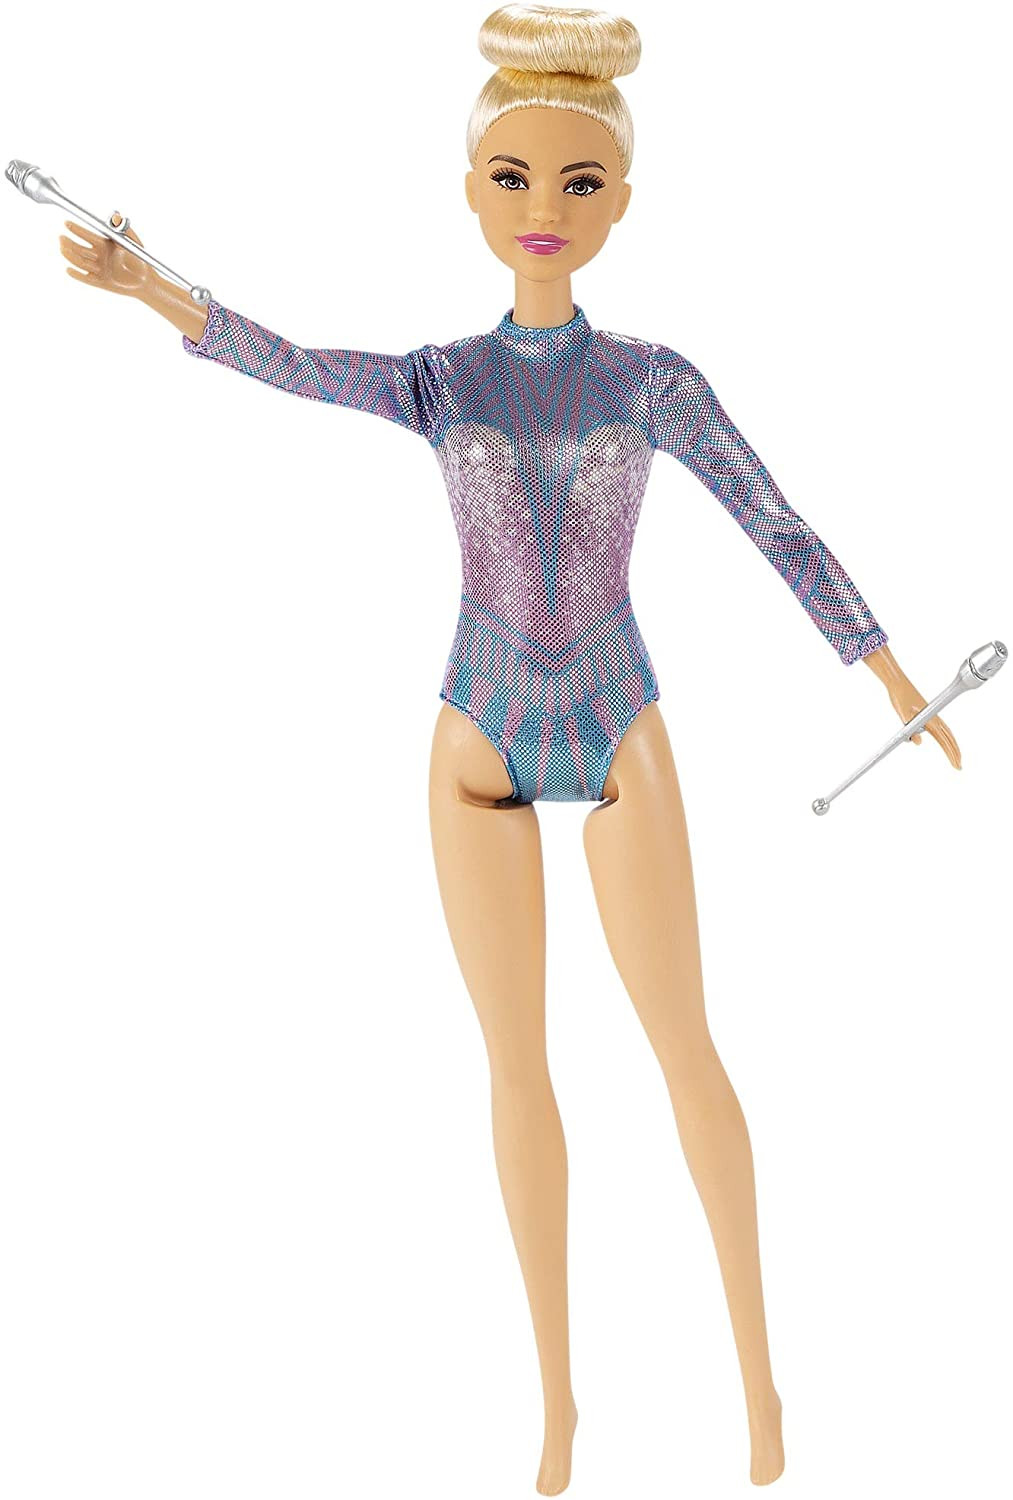 Muñeca Barbie Carrera-gimnasta rítmica GTN65 * Nuevo * 